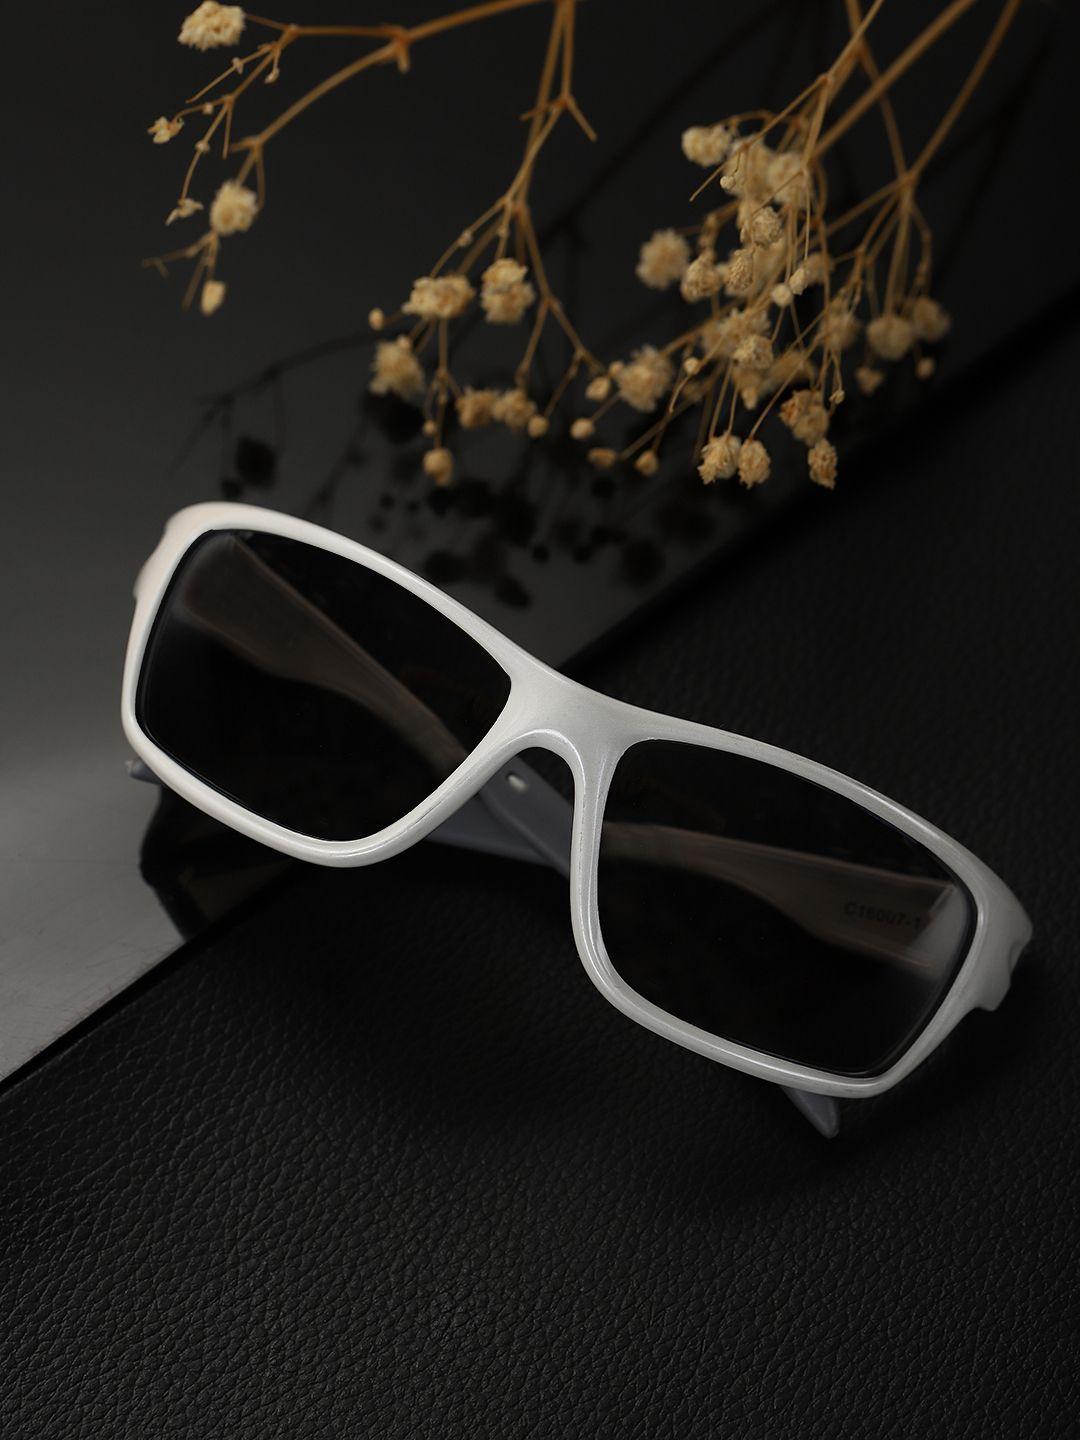 carlton london boys mirrored lens & white rectangle sunglasses with uv protected lens